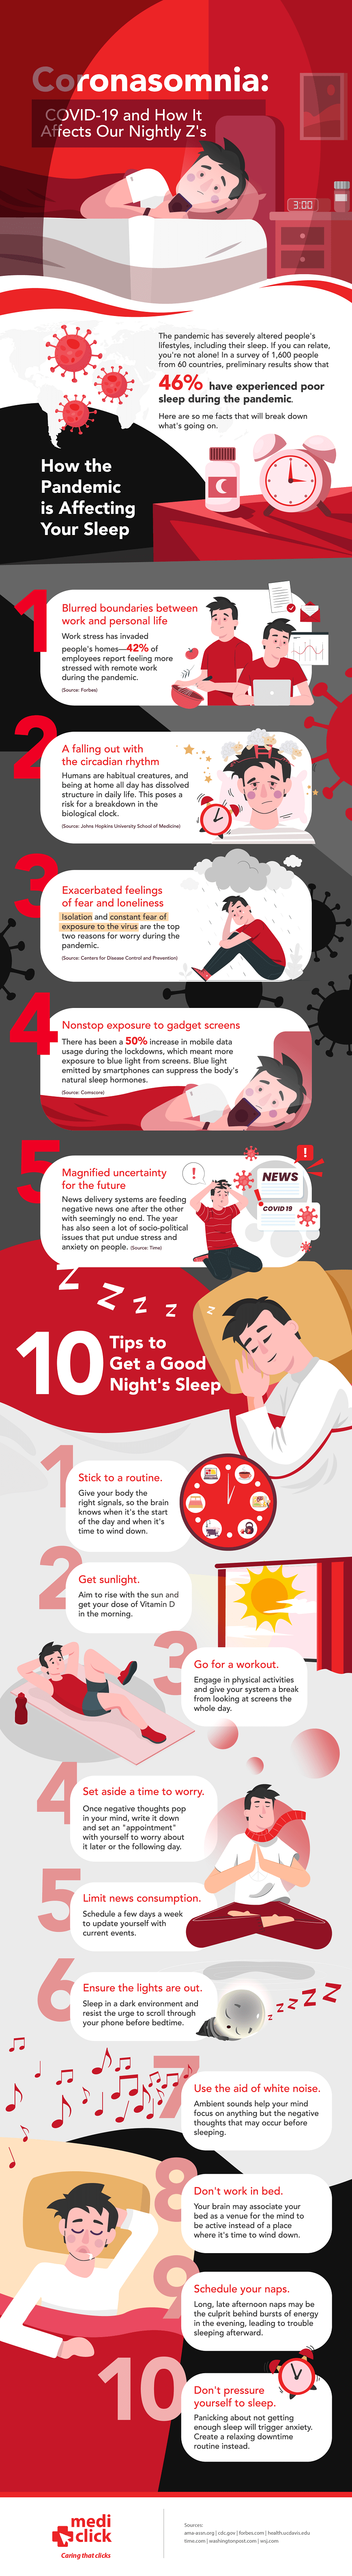 coronasomnia_crisis_and_tips_to_get_better_sleep_-_infographic-min.png